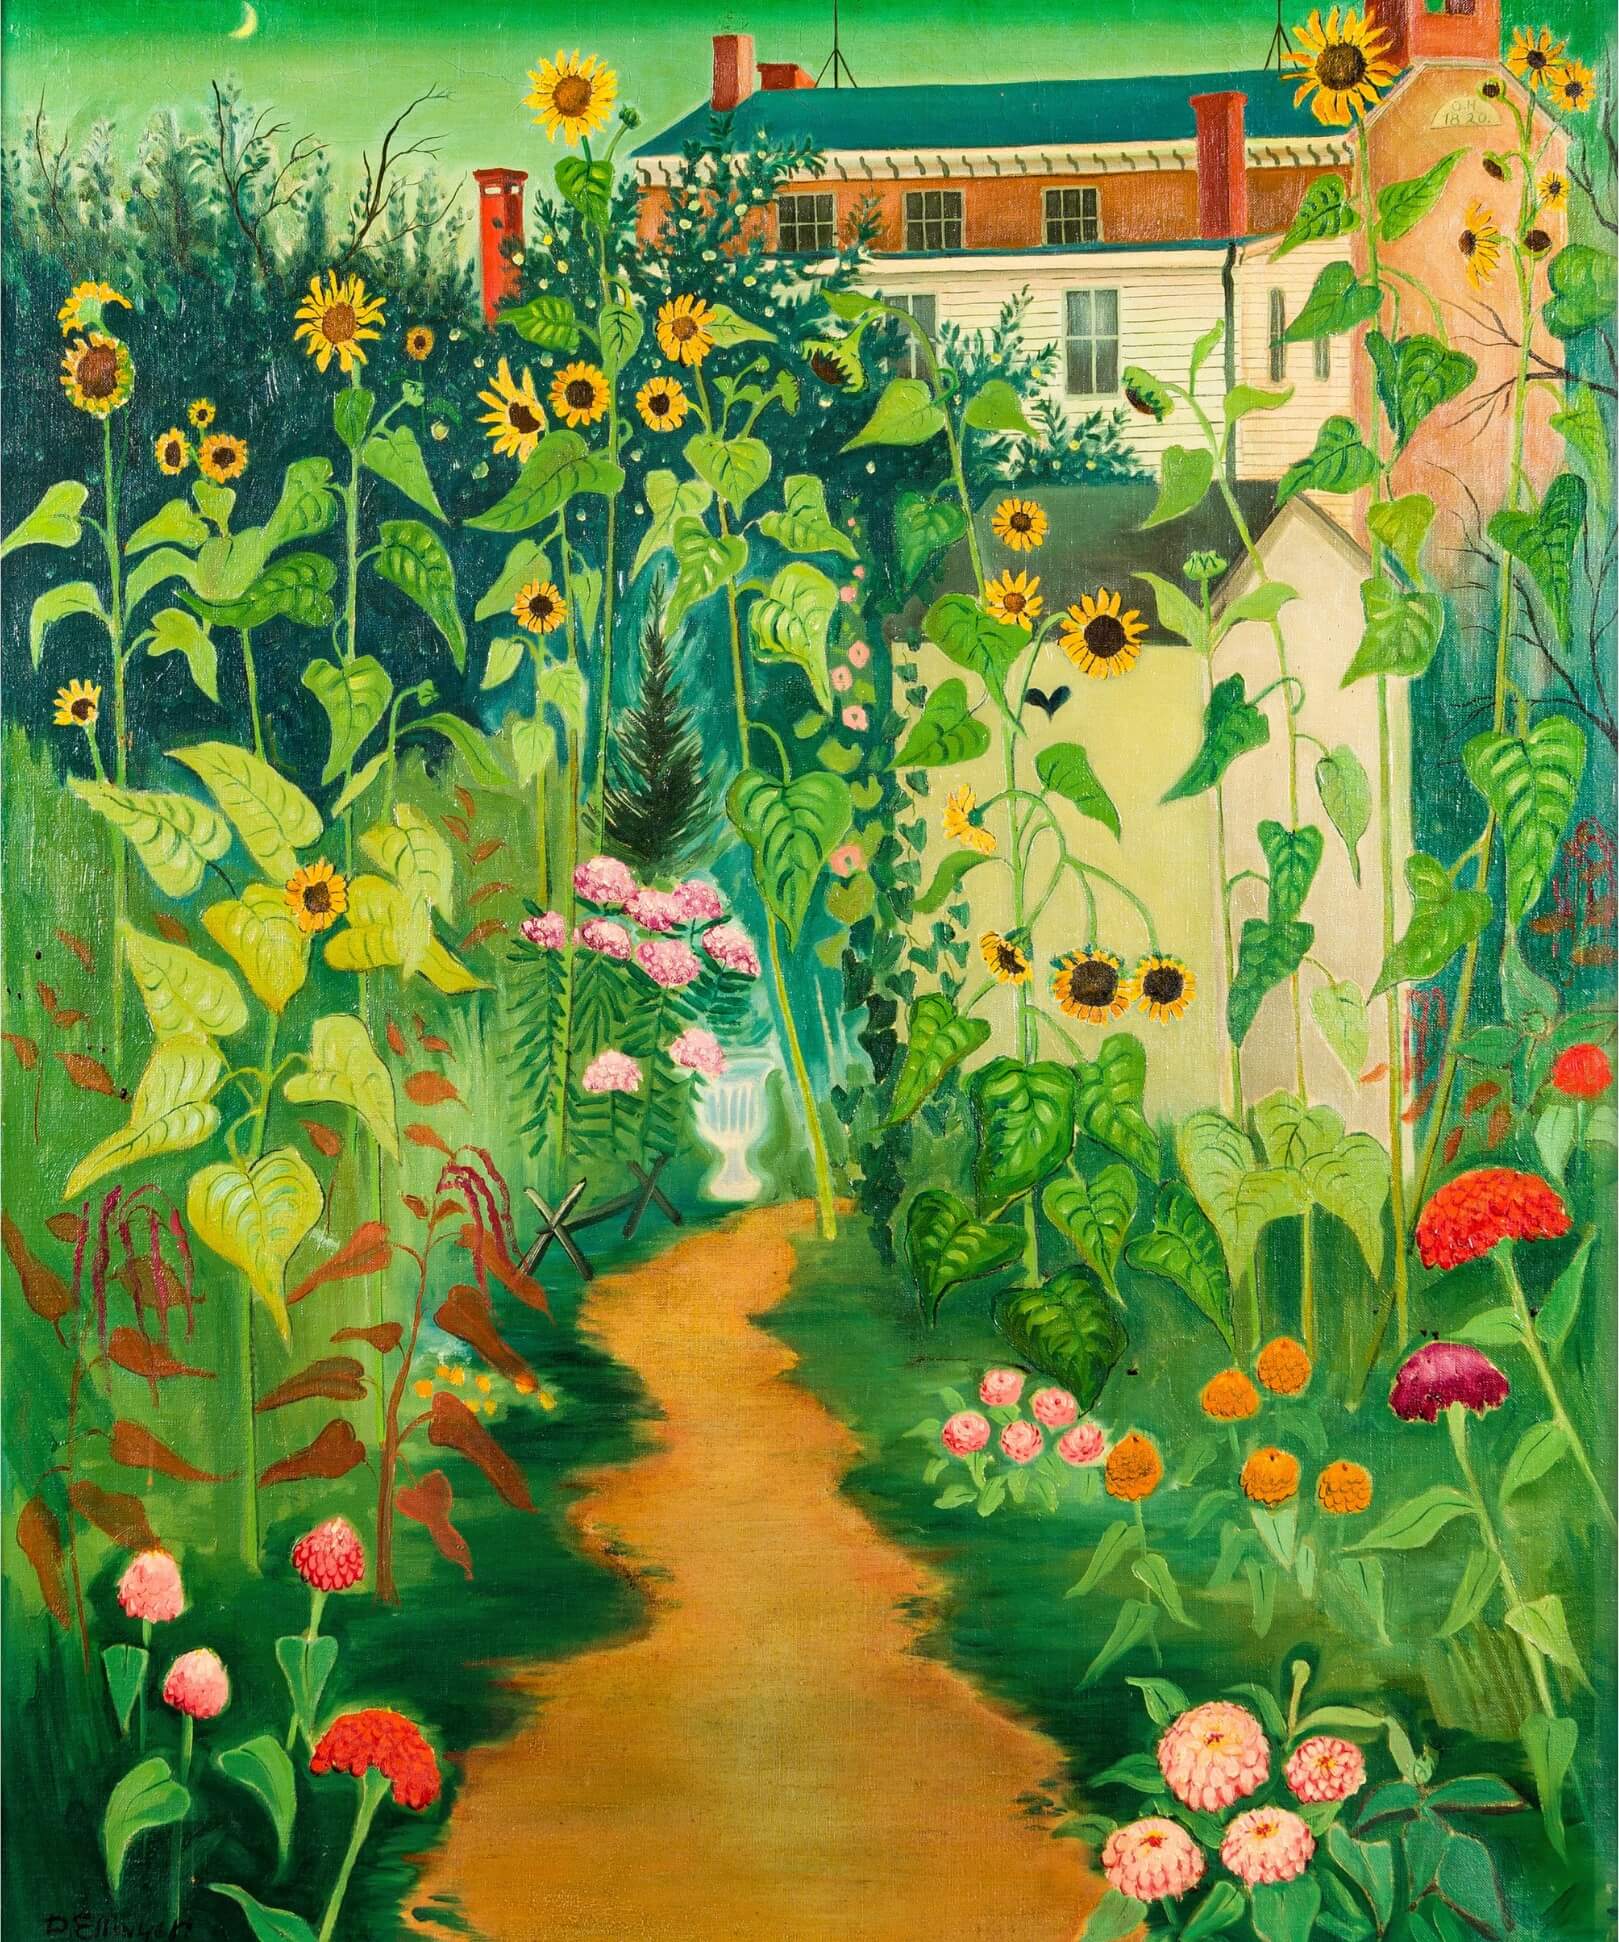 Garden Path by David Ellinger (1)